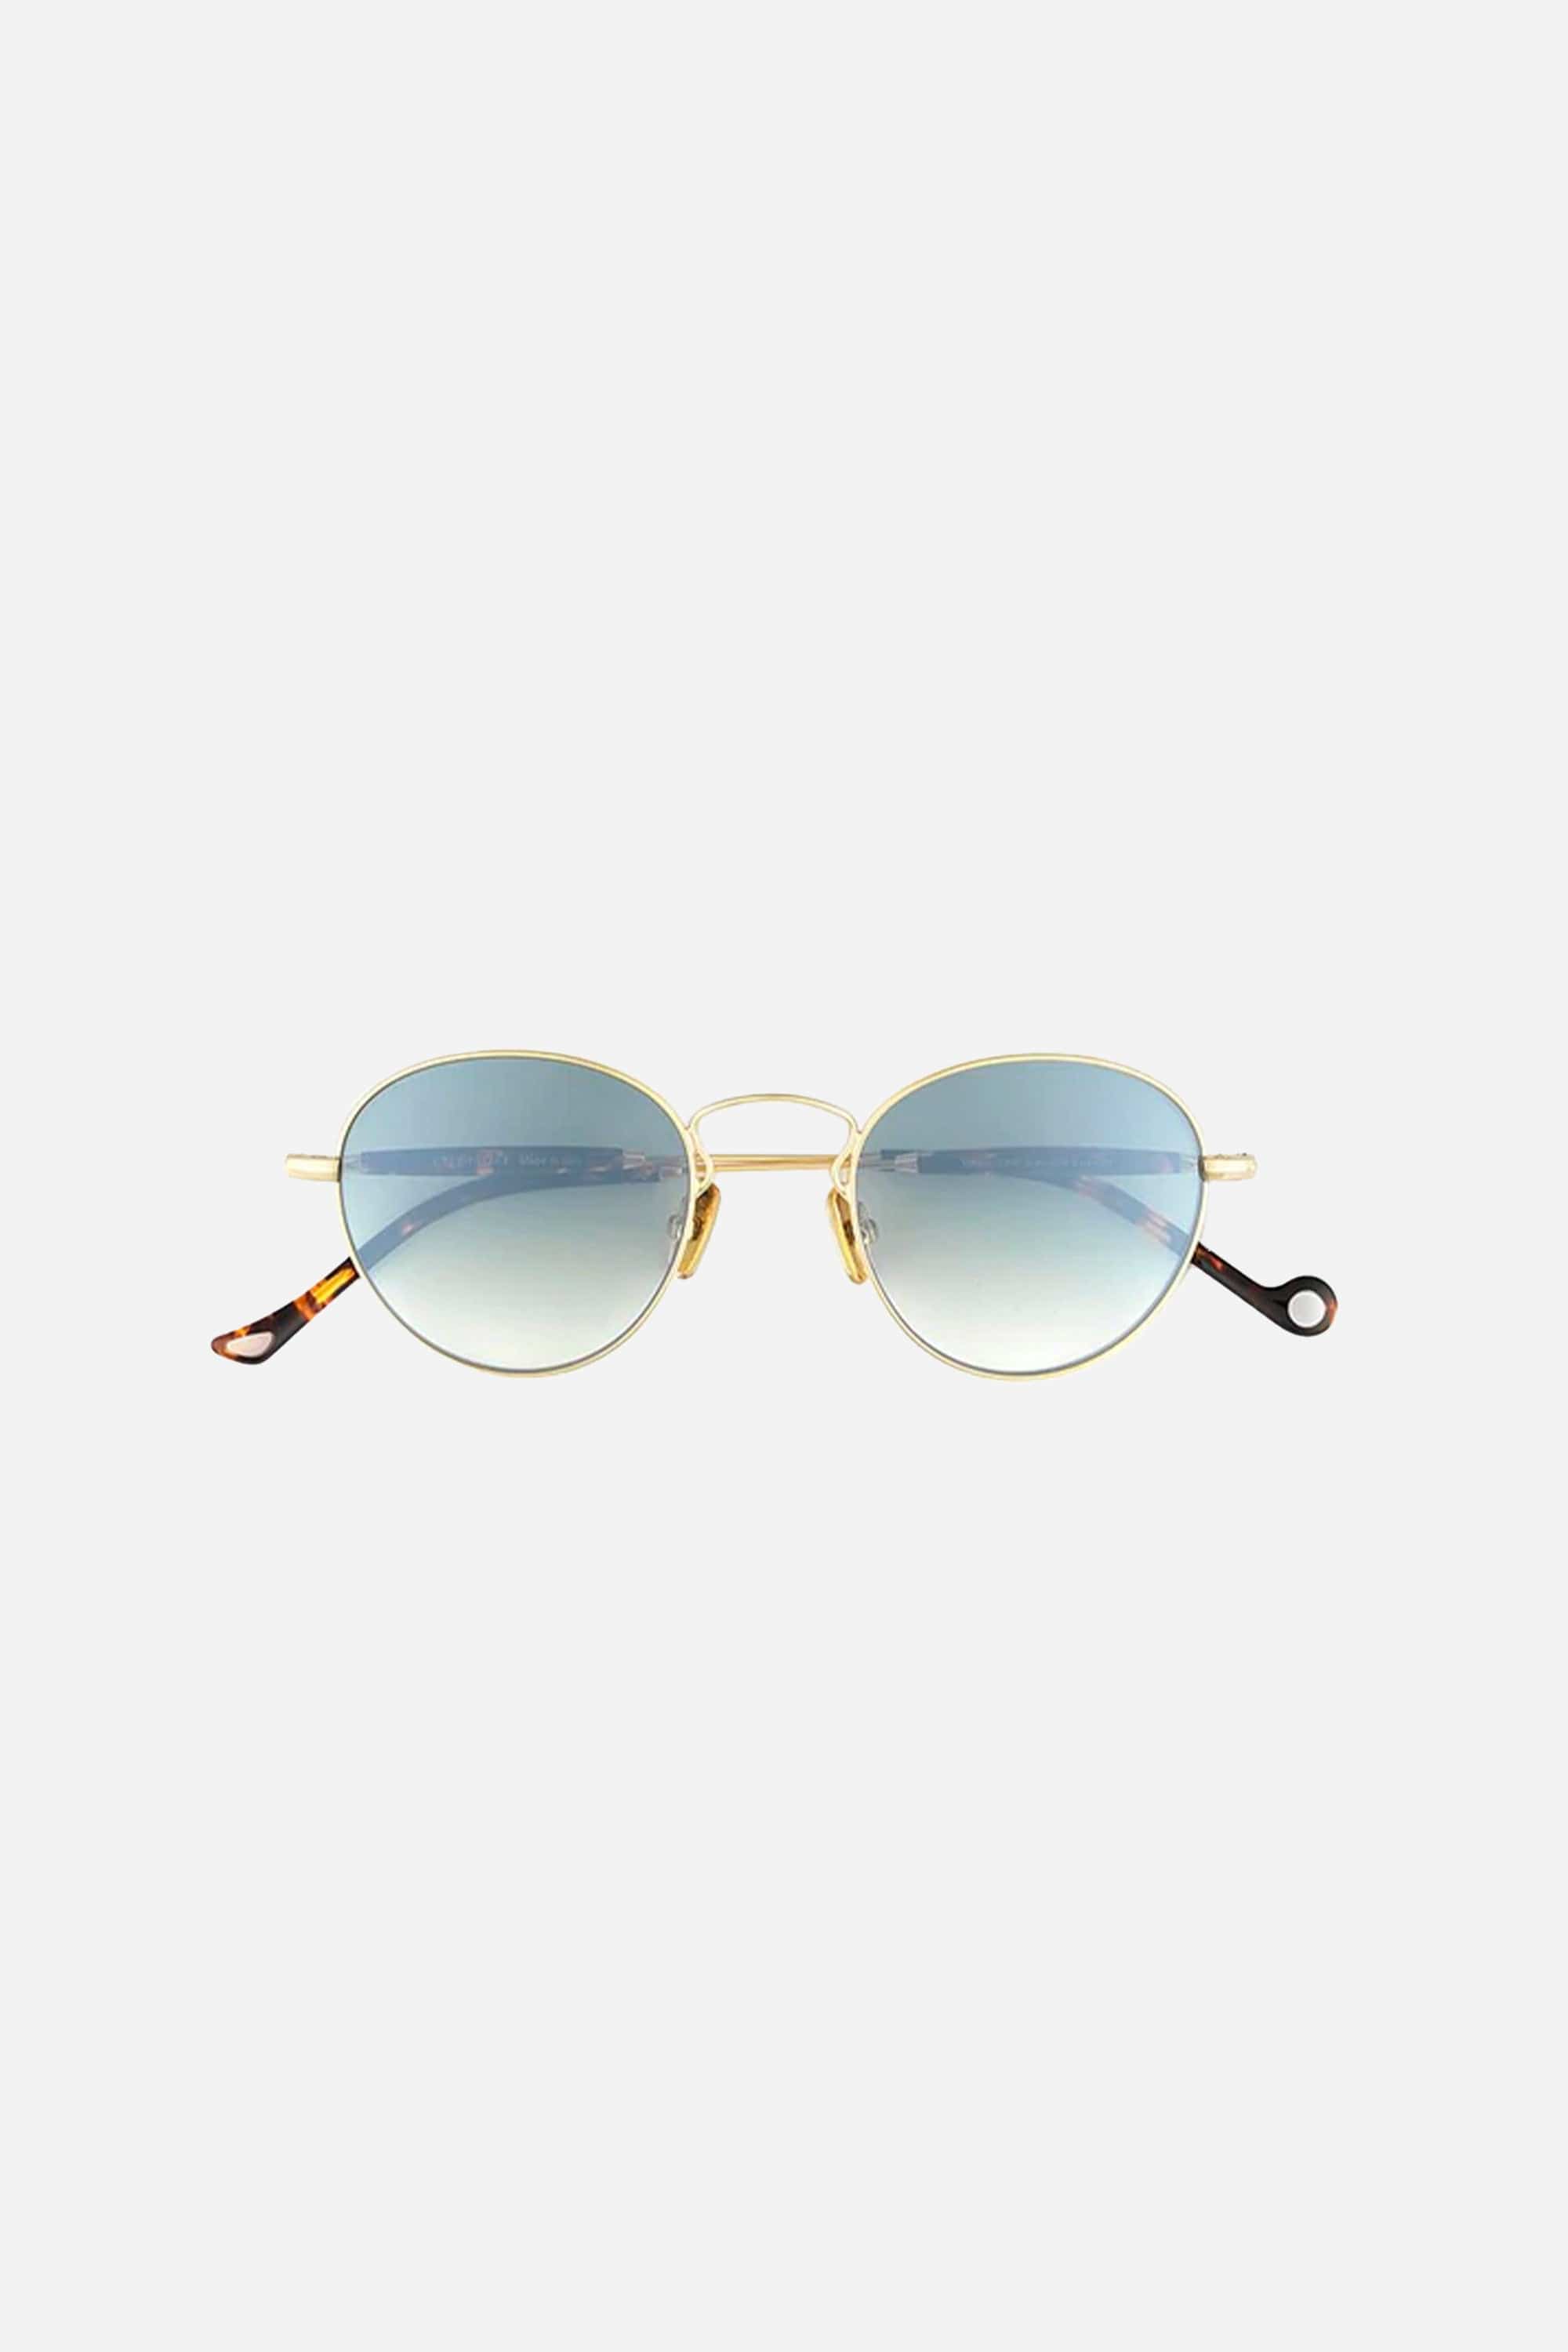 Eyepetizer round gold and blue sunglasses - Eyewear Club